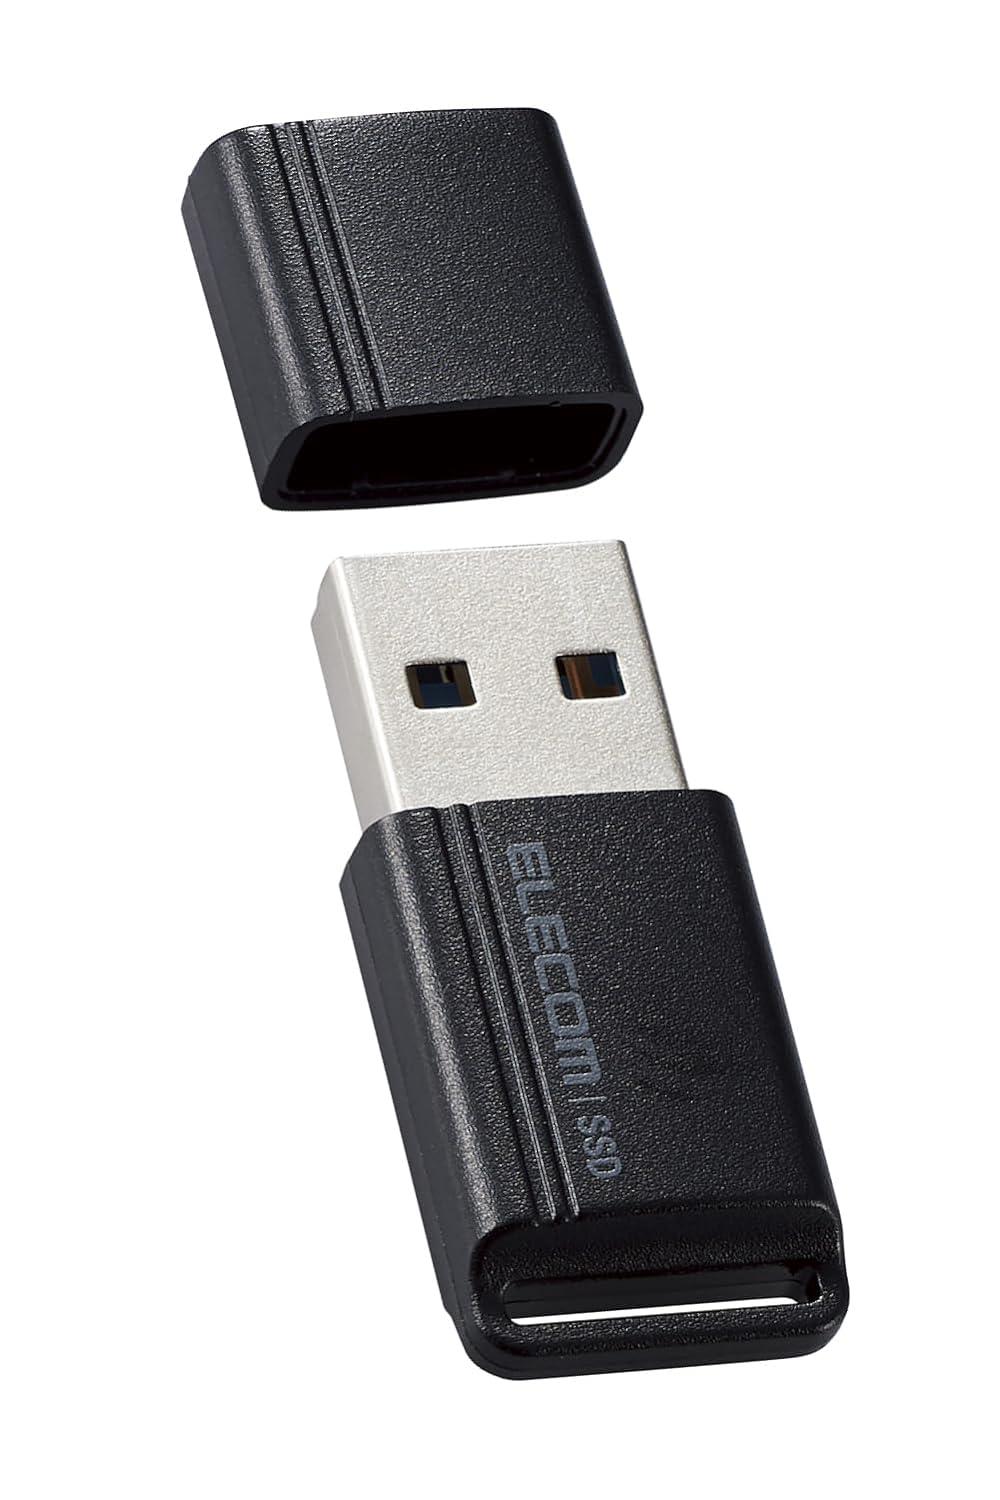 OtSSD/|[^u/USB3.2(Gen1)/^USB^/500GB/ubN(ESD-EXS0500GBK)